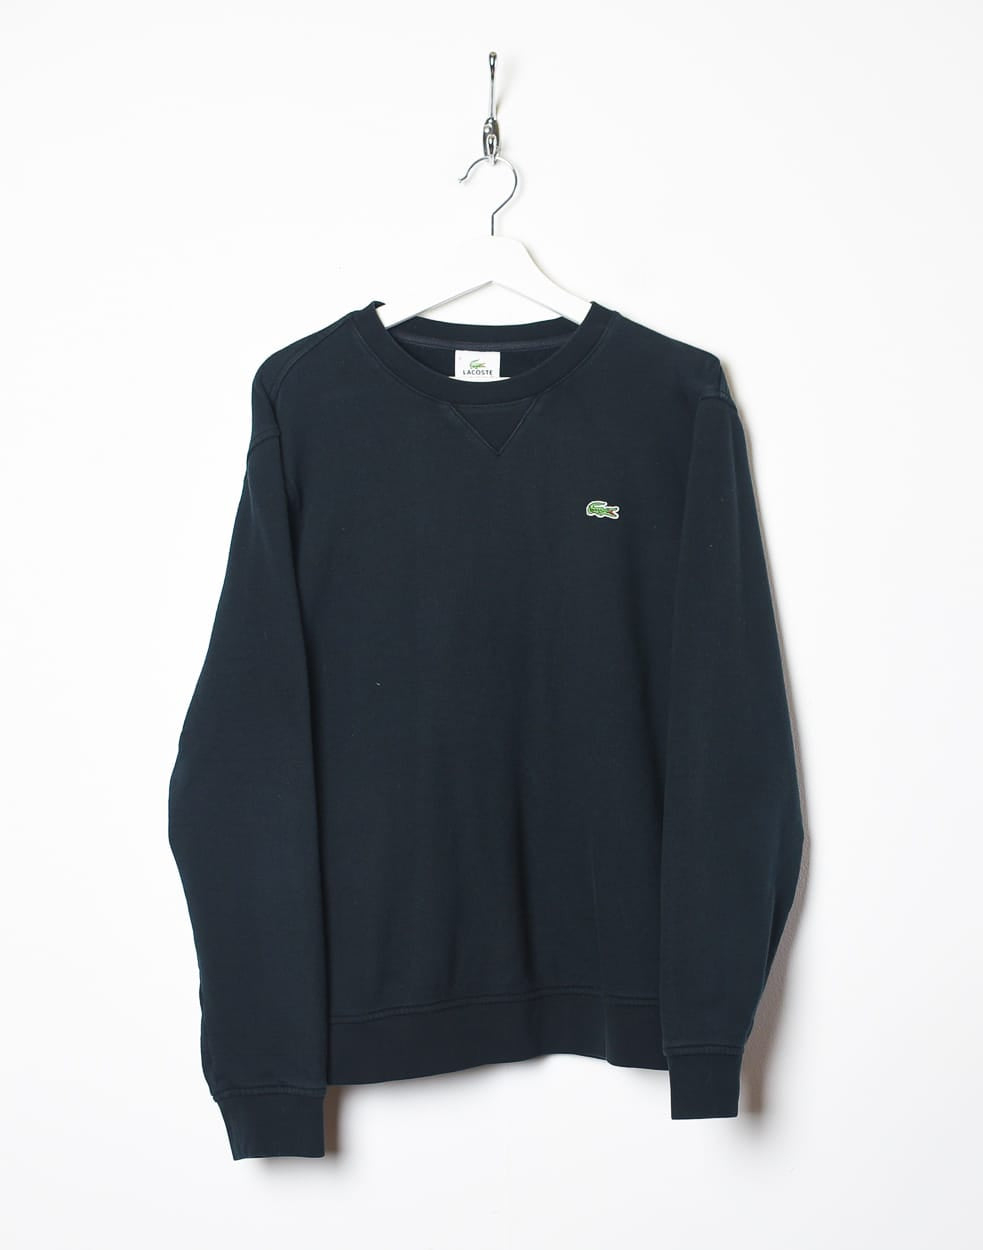 Black Lacoste Sport Sweatshirt - Medium